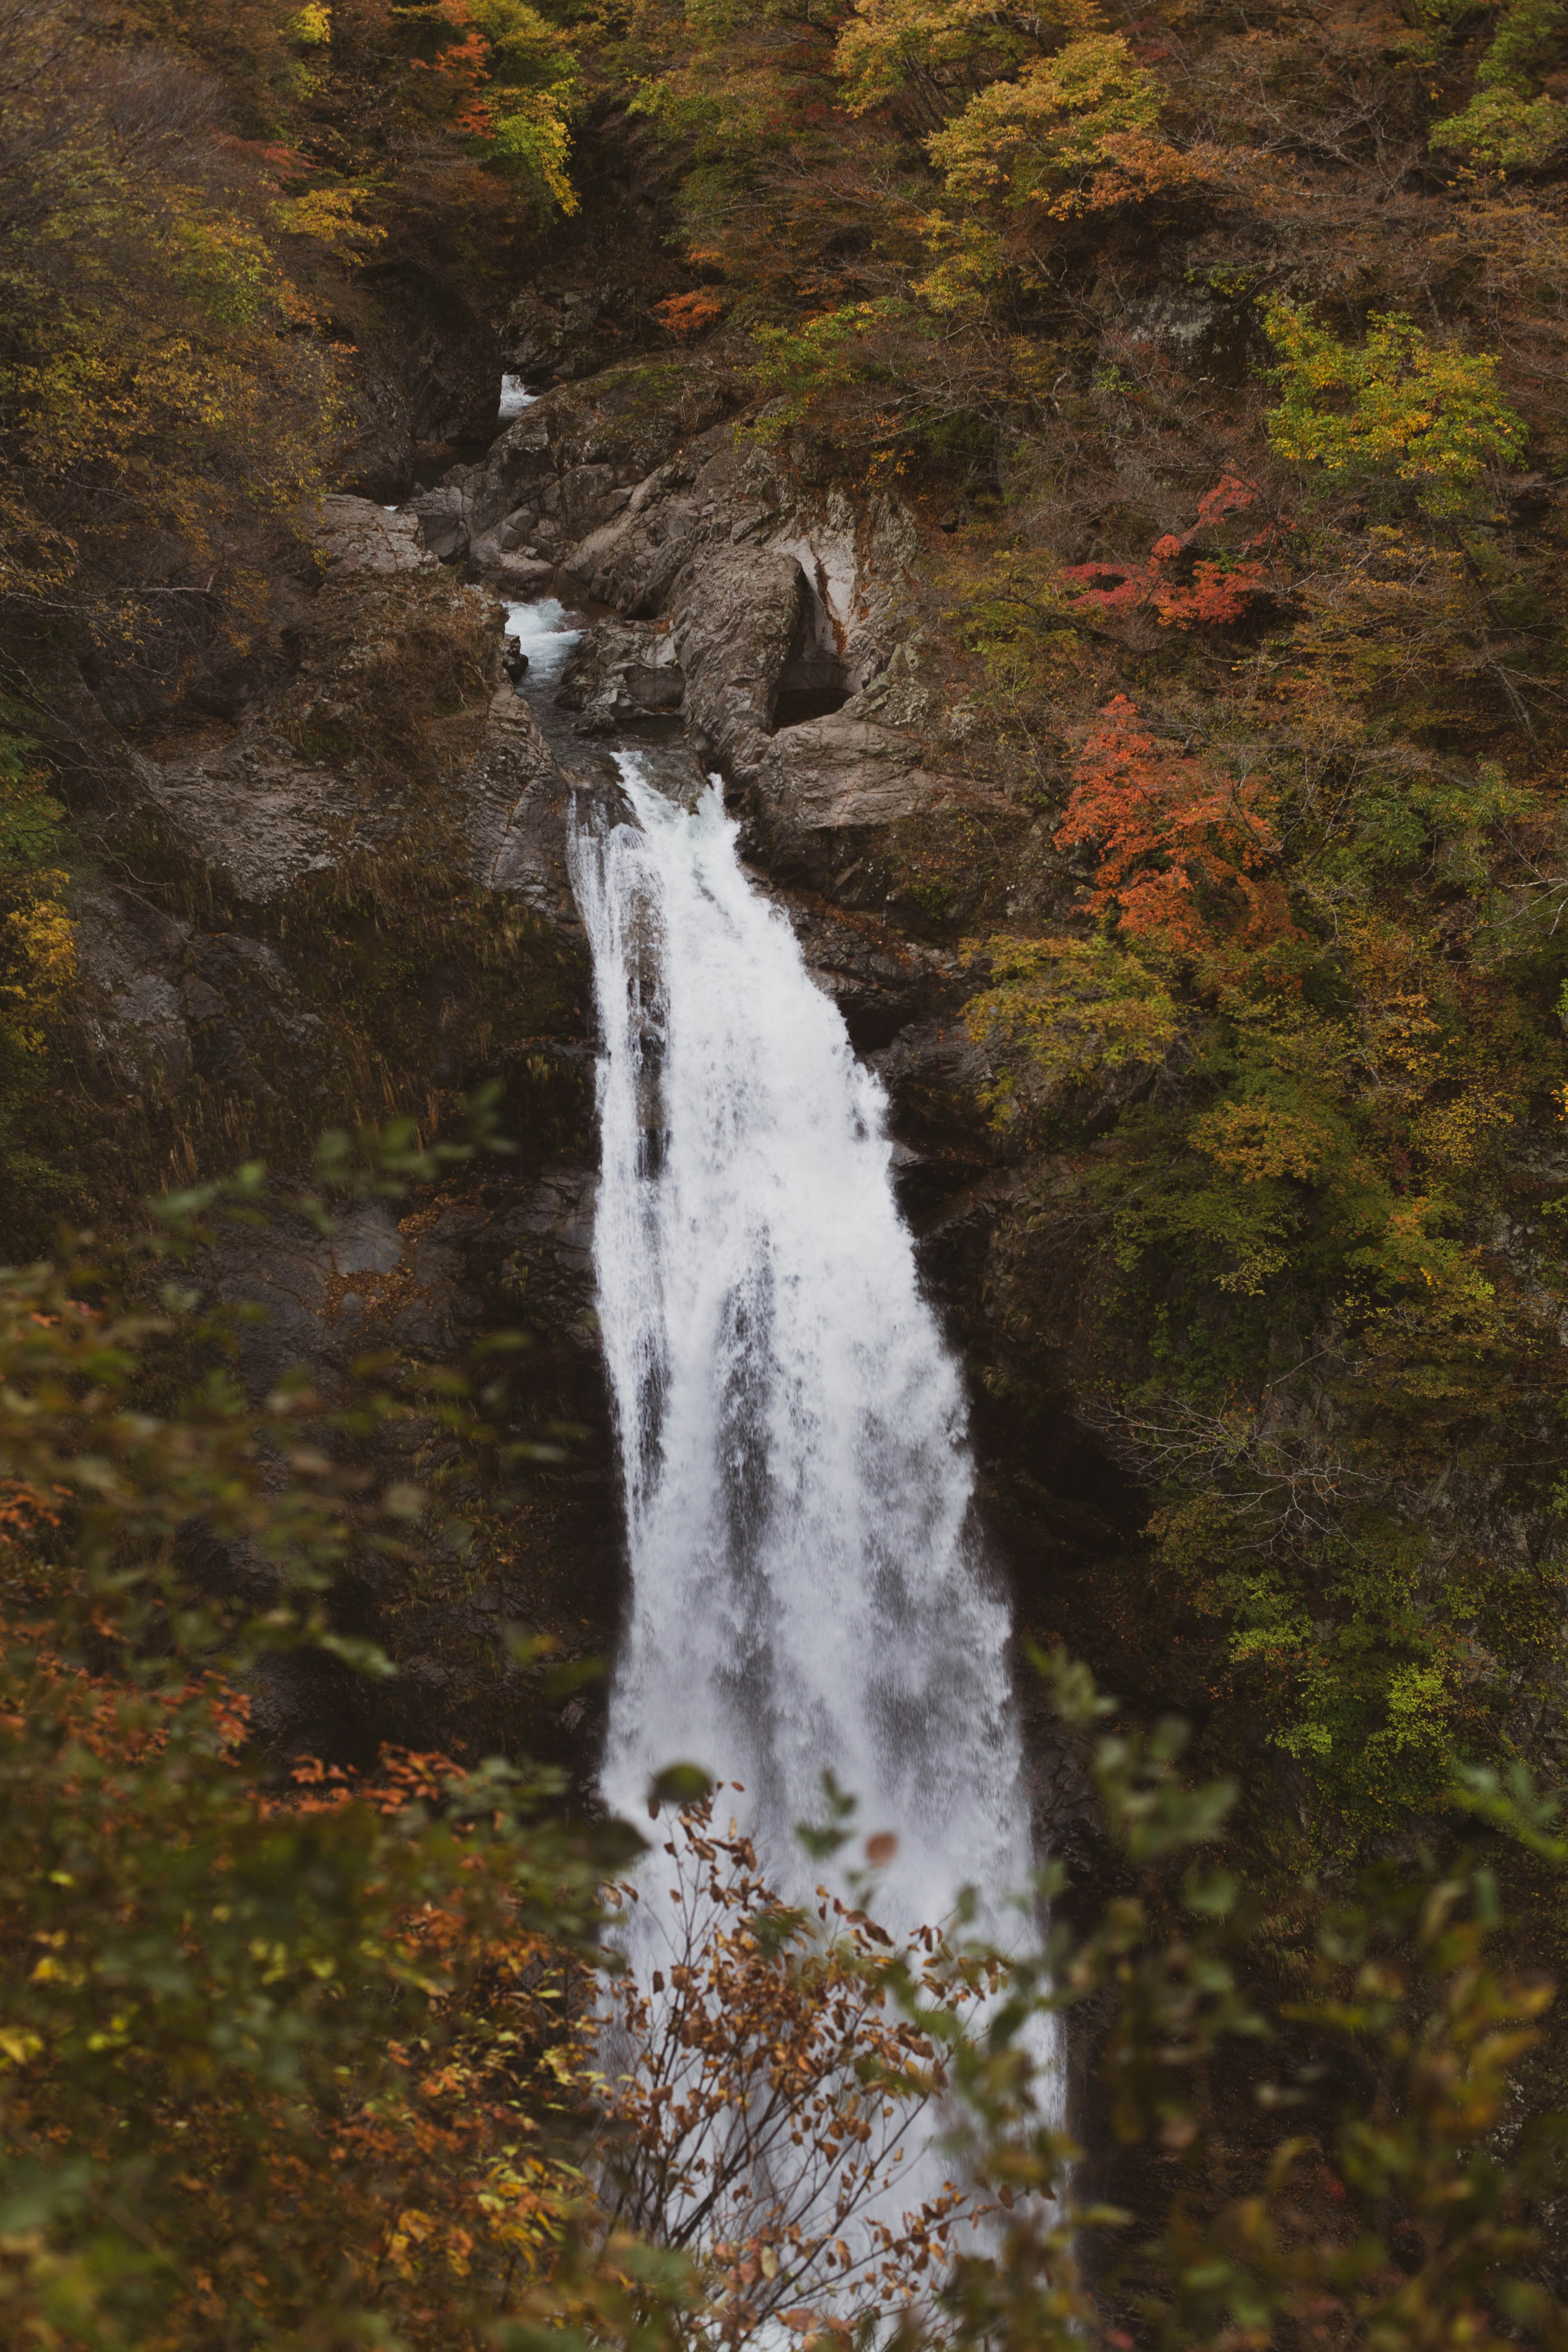 The Akiu Otaki waterfall in Miyagi Prefecture flows quickly amidst autumnal foliage